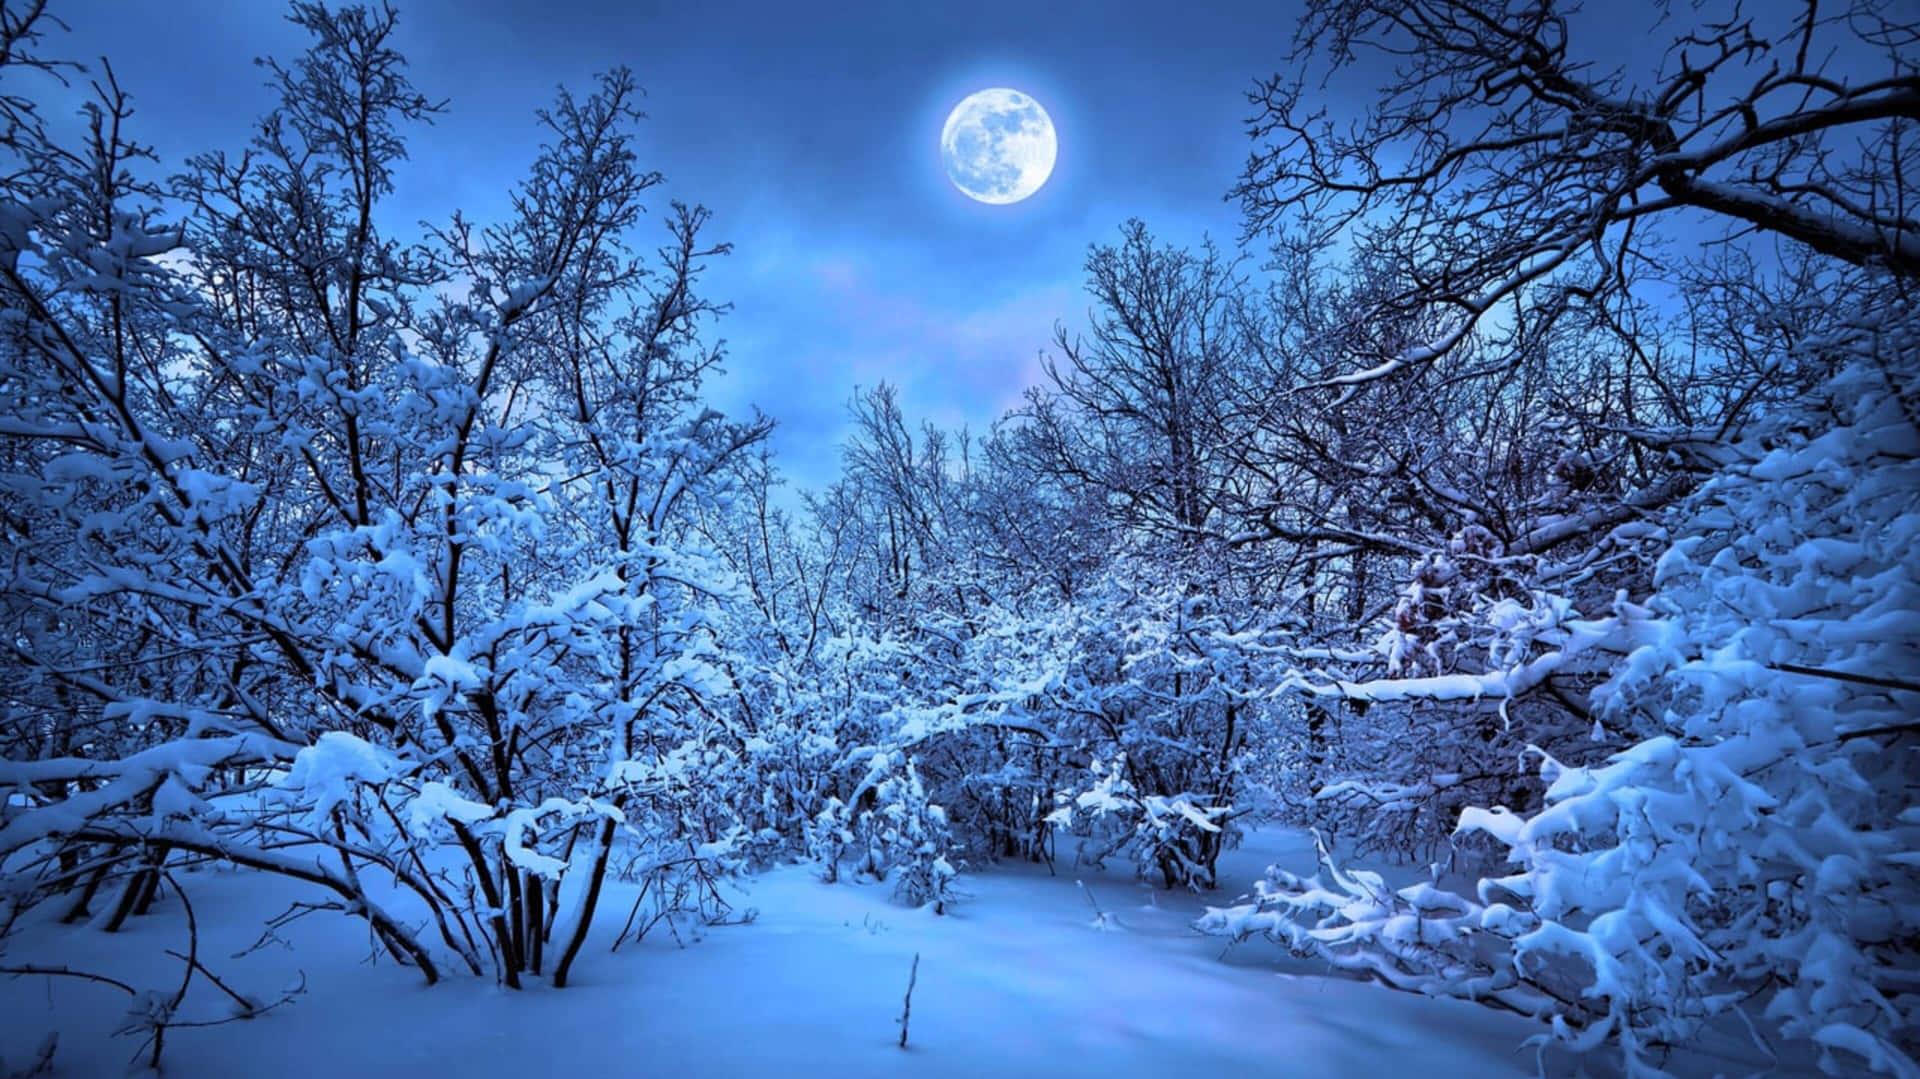 Download Full Moon In 4k Winter Background